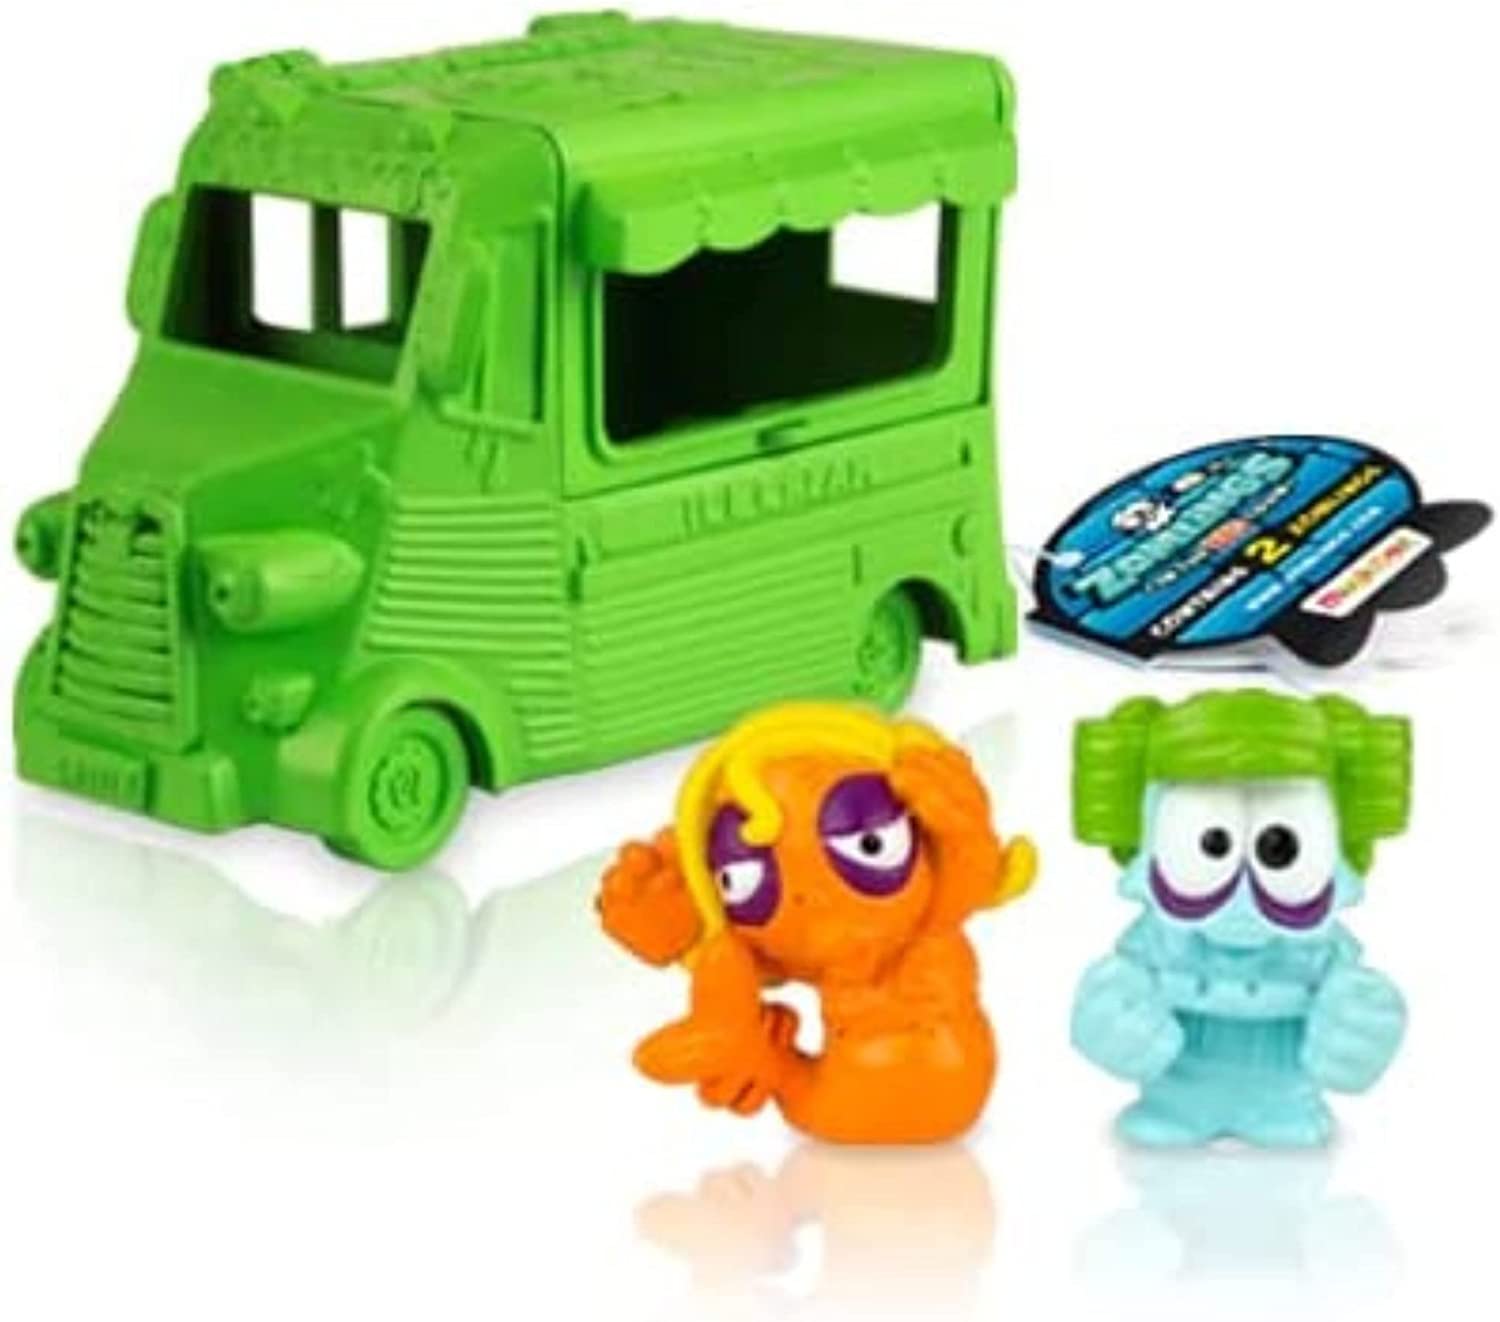 Zomlings Series 5 - Full Box of 12 Blind Box Vehicles - Includes Ice Cream Van, Fire Truck & Police Car - Toptoys2u